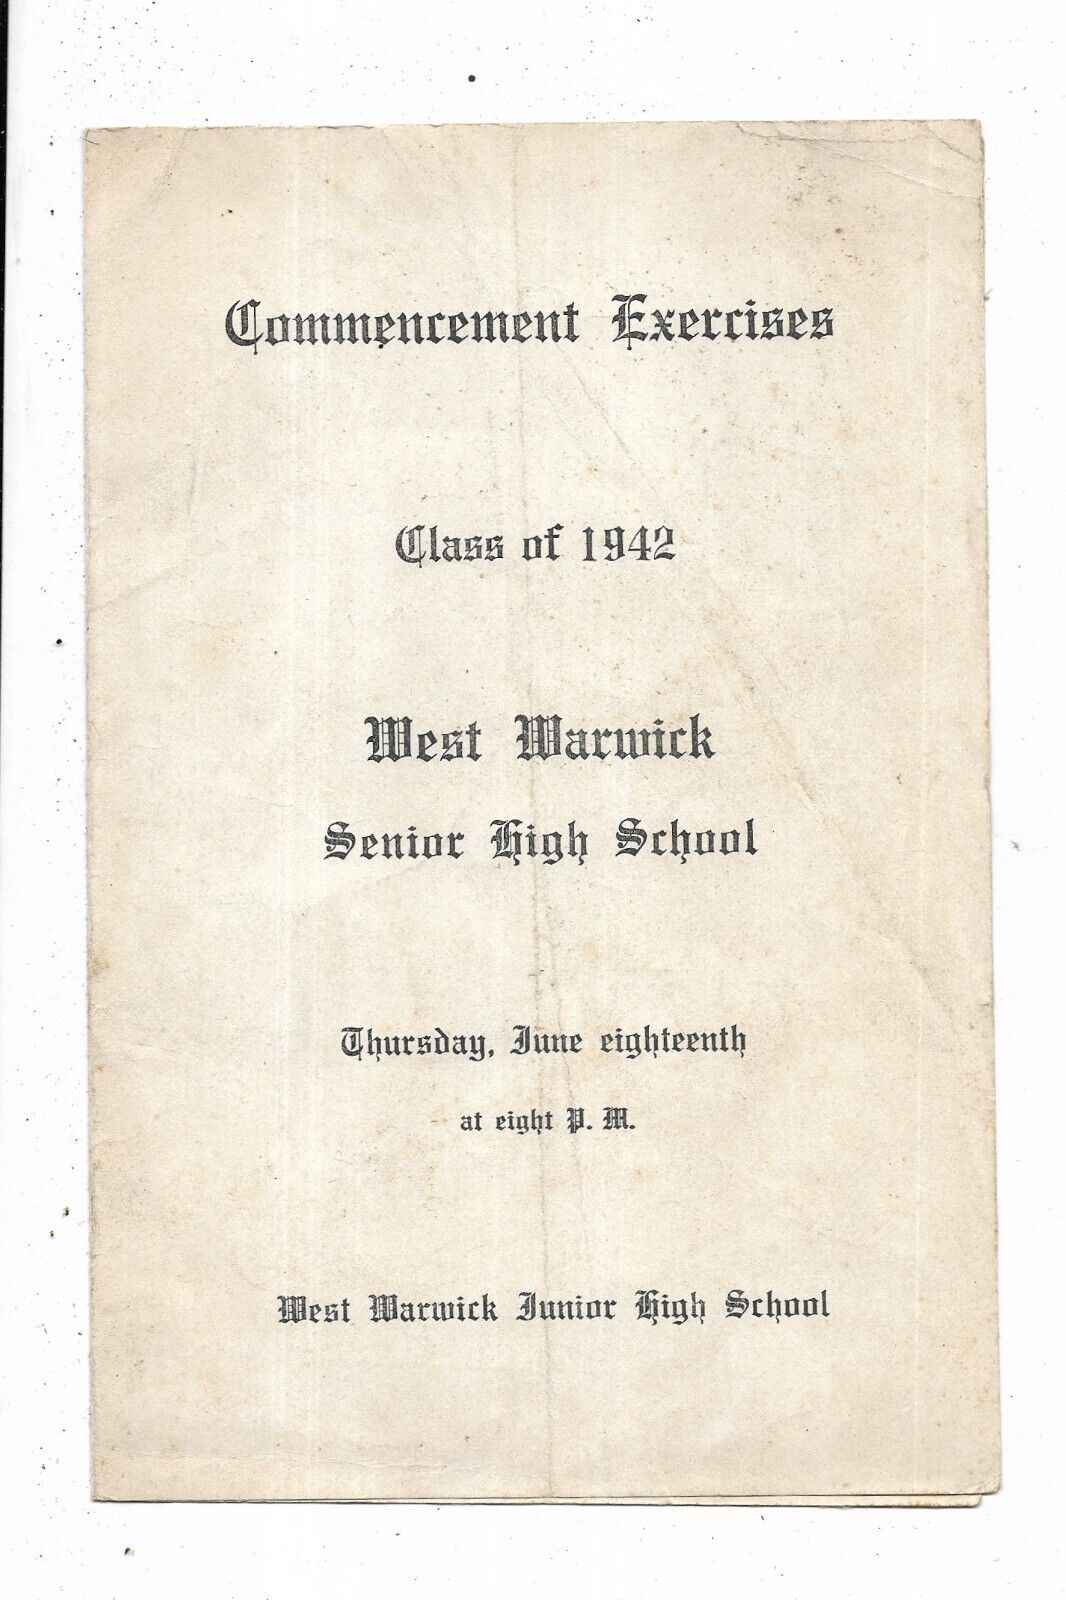 Class of 1942- West Warwick Senior High School Commencement Exercises-list grads